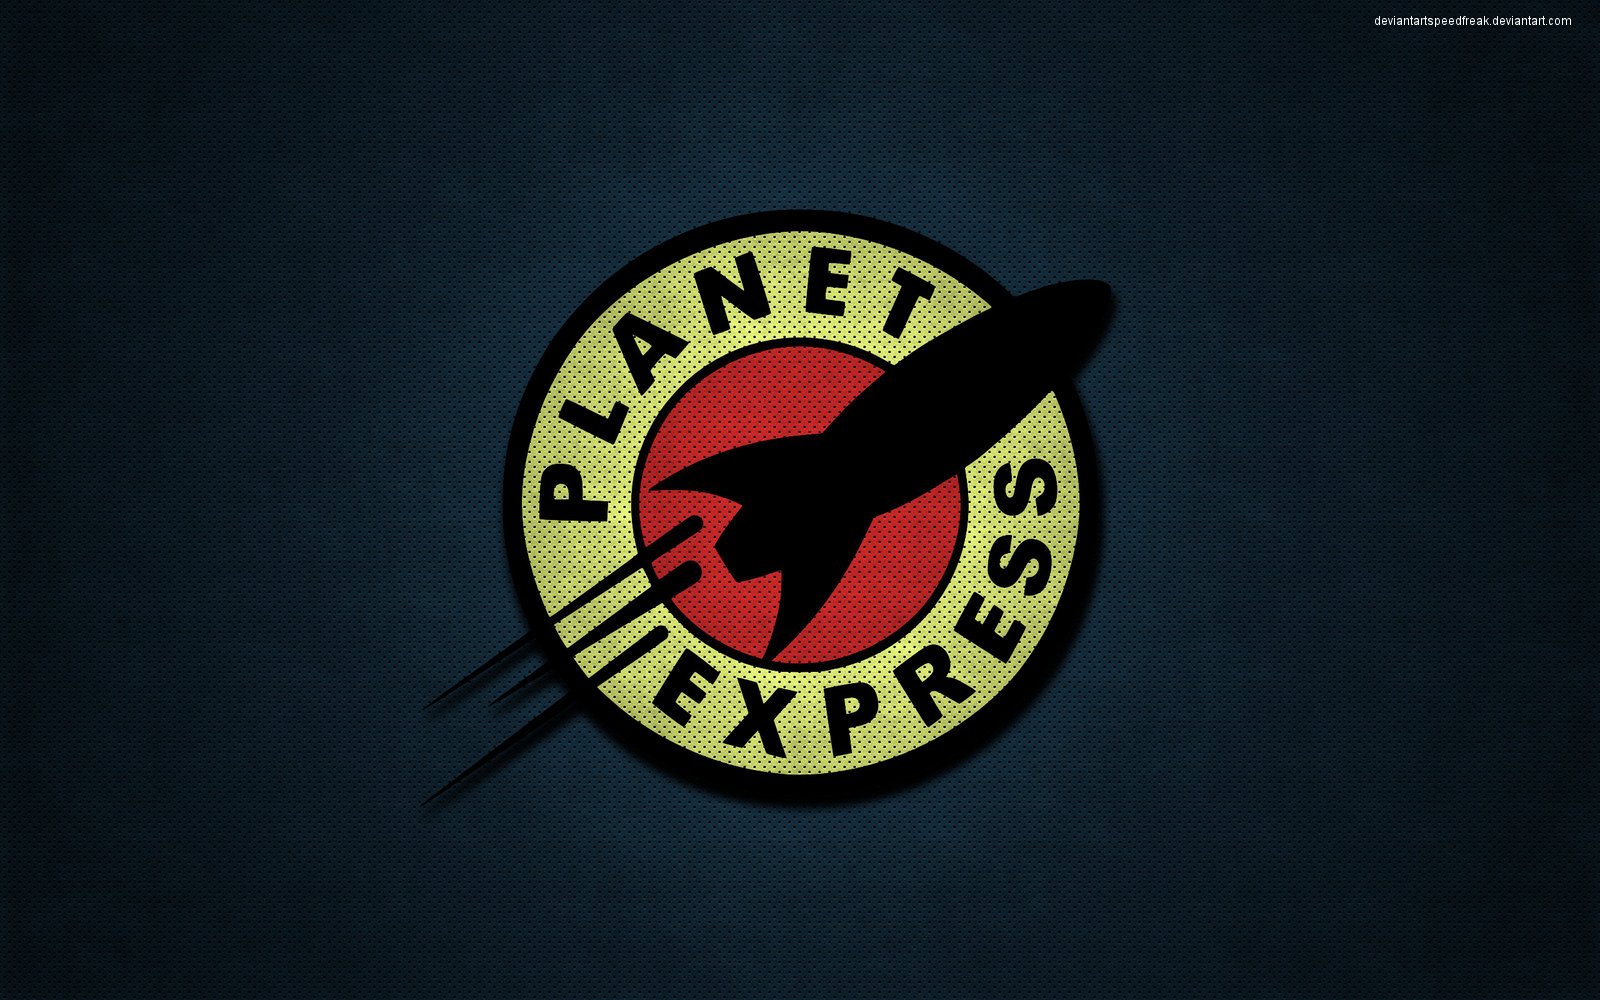 Futurama Planet Express wallpaper by deviantartspeedfreak on